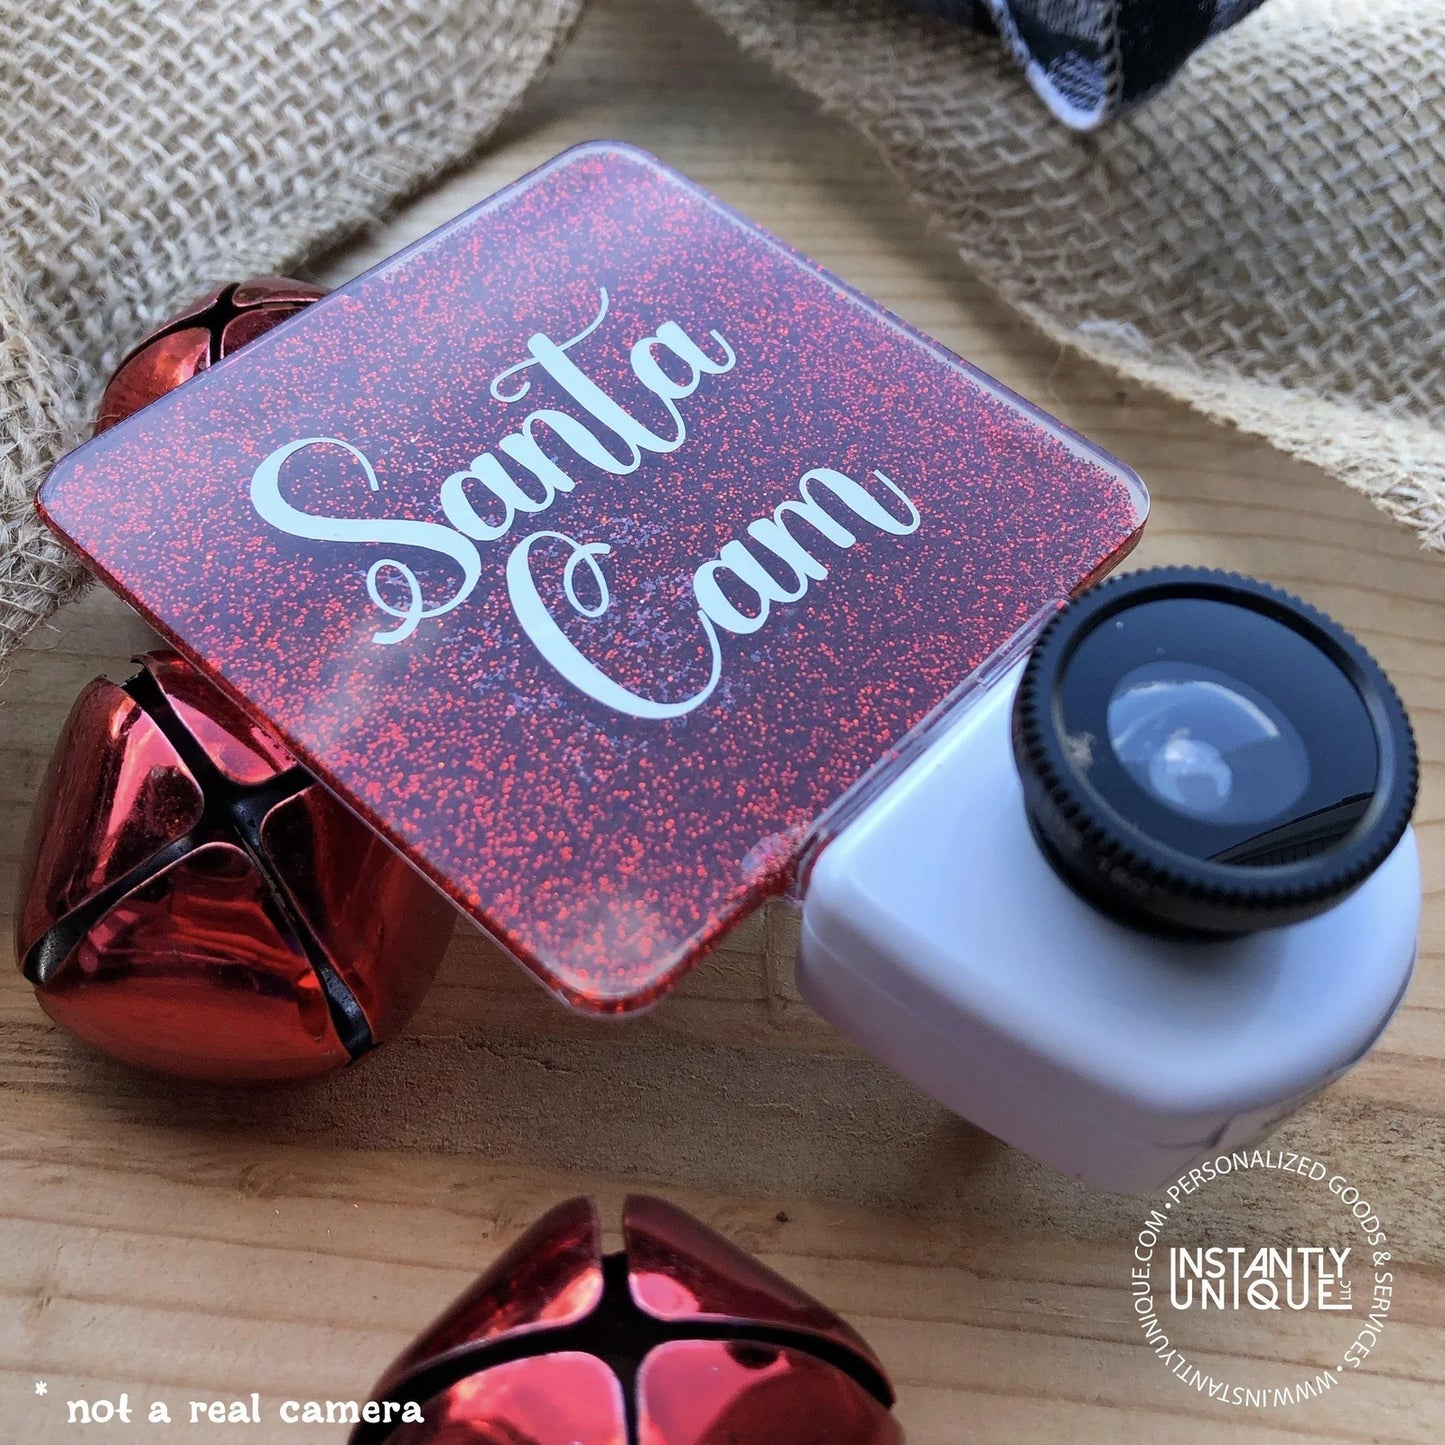 Santa Cam Night Light - Spy Cam Night Light for Kids - Ready to Ship